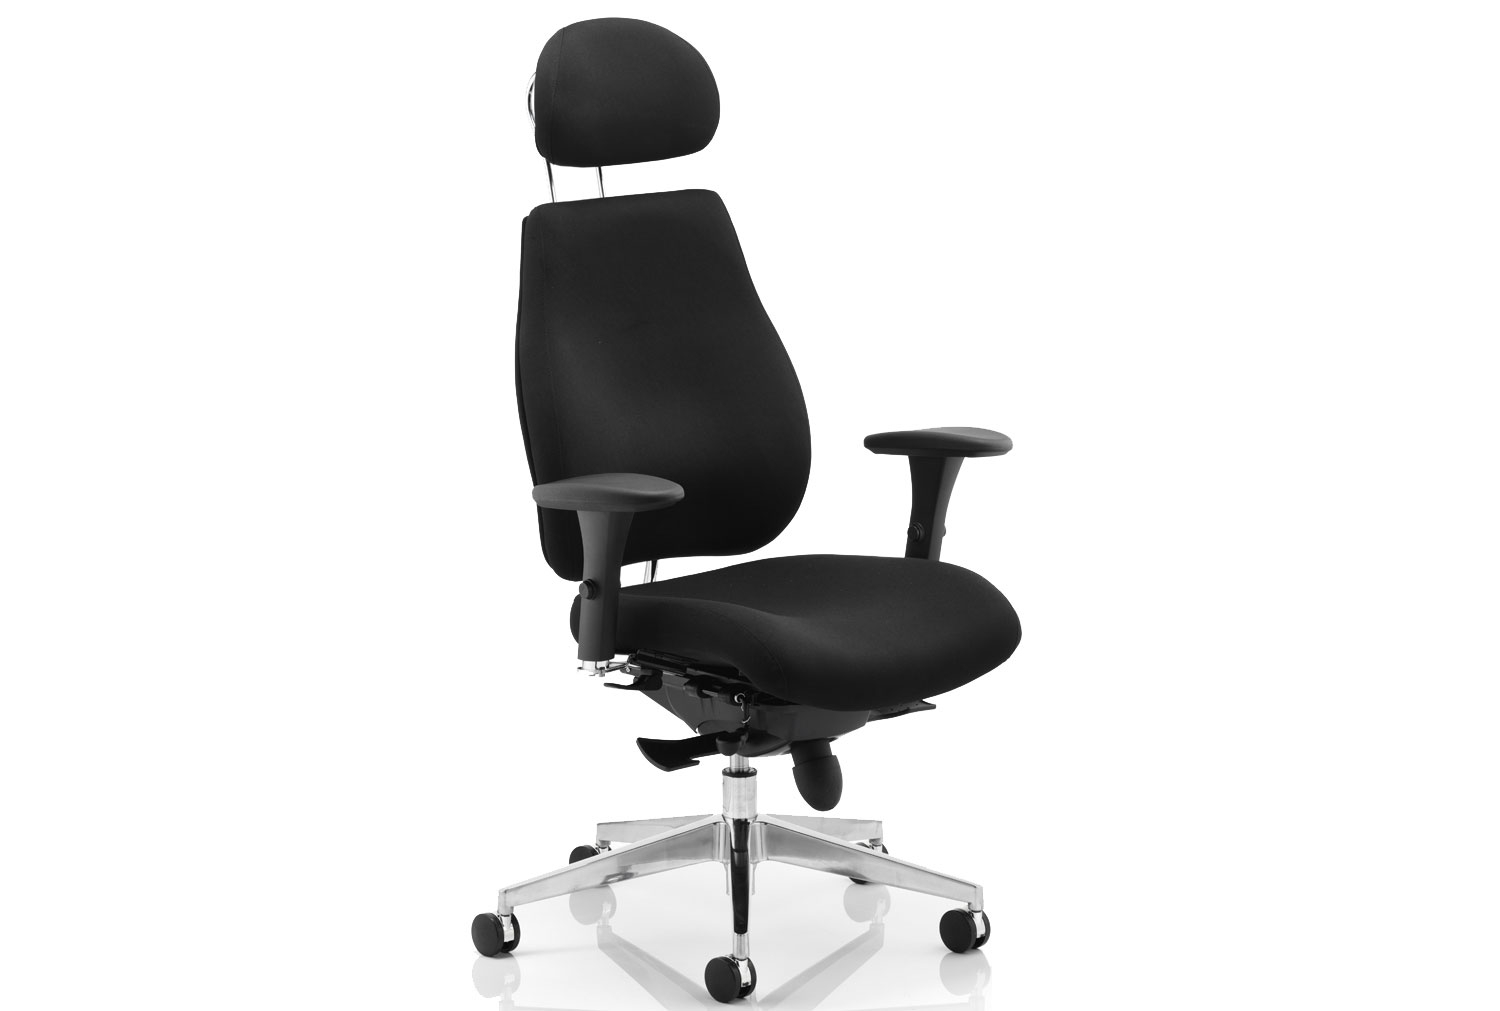 Praktikos Plus Ergonomic Posture Office Chair With Headrest, Black